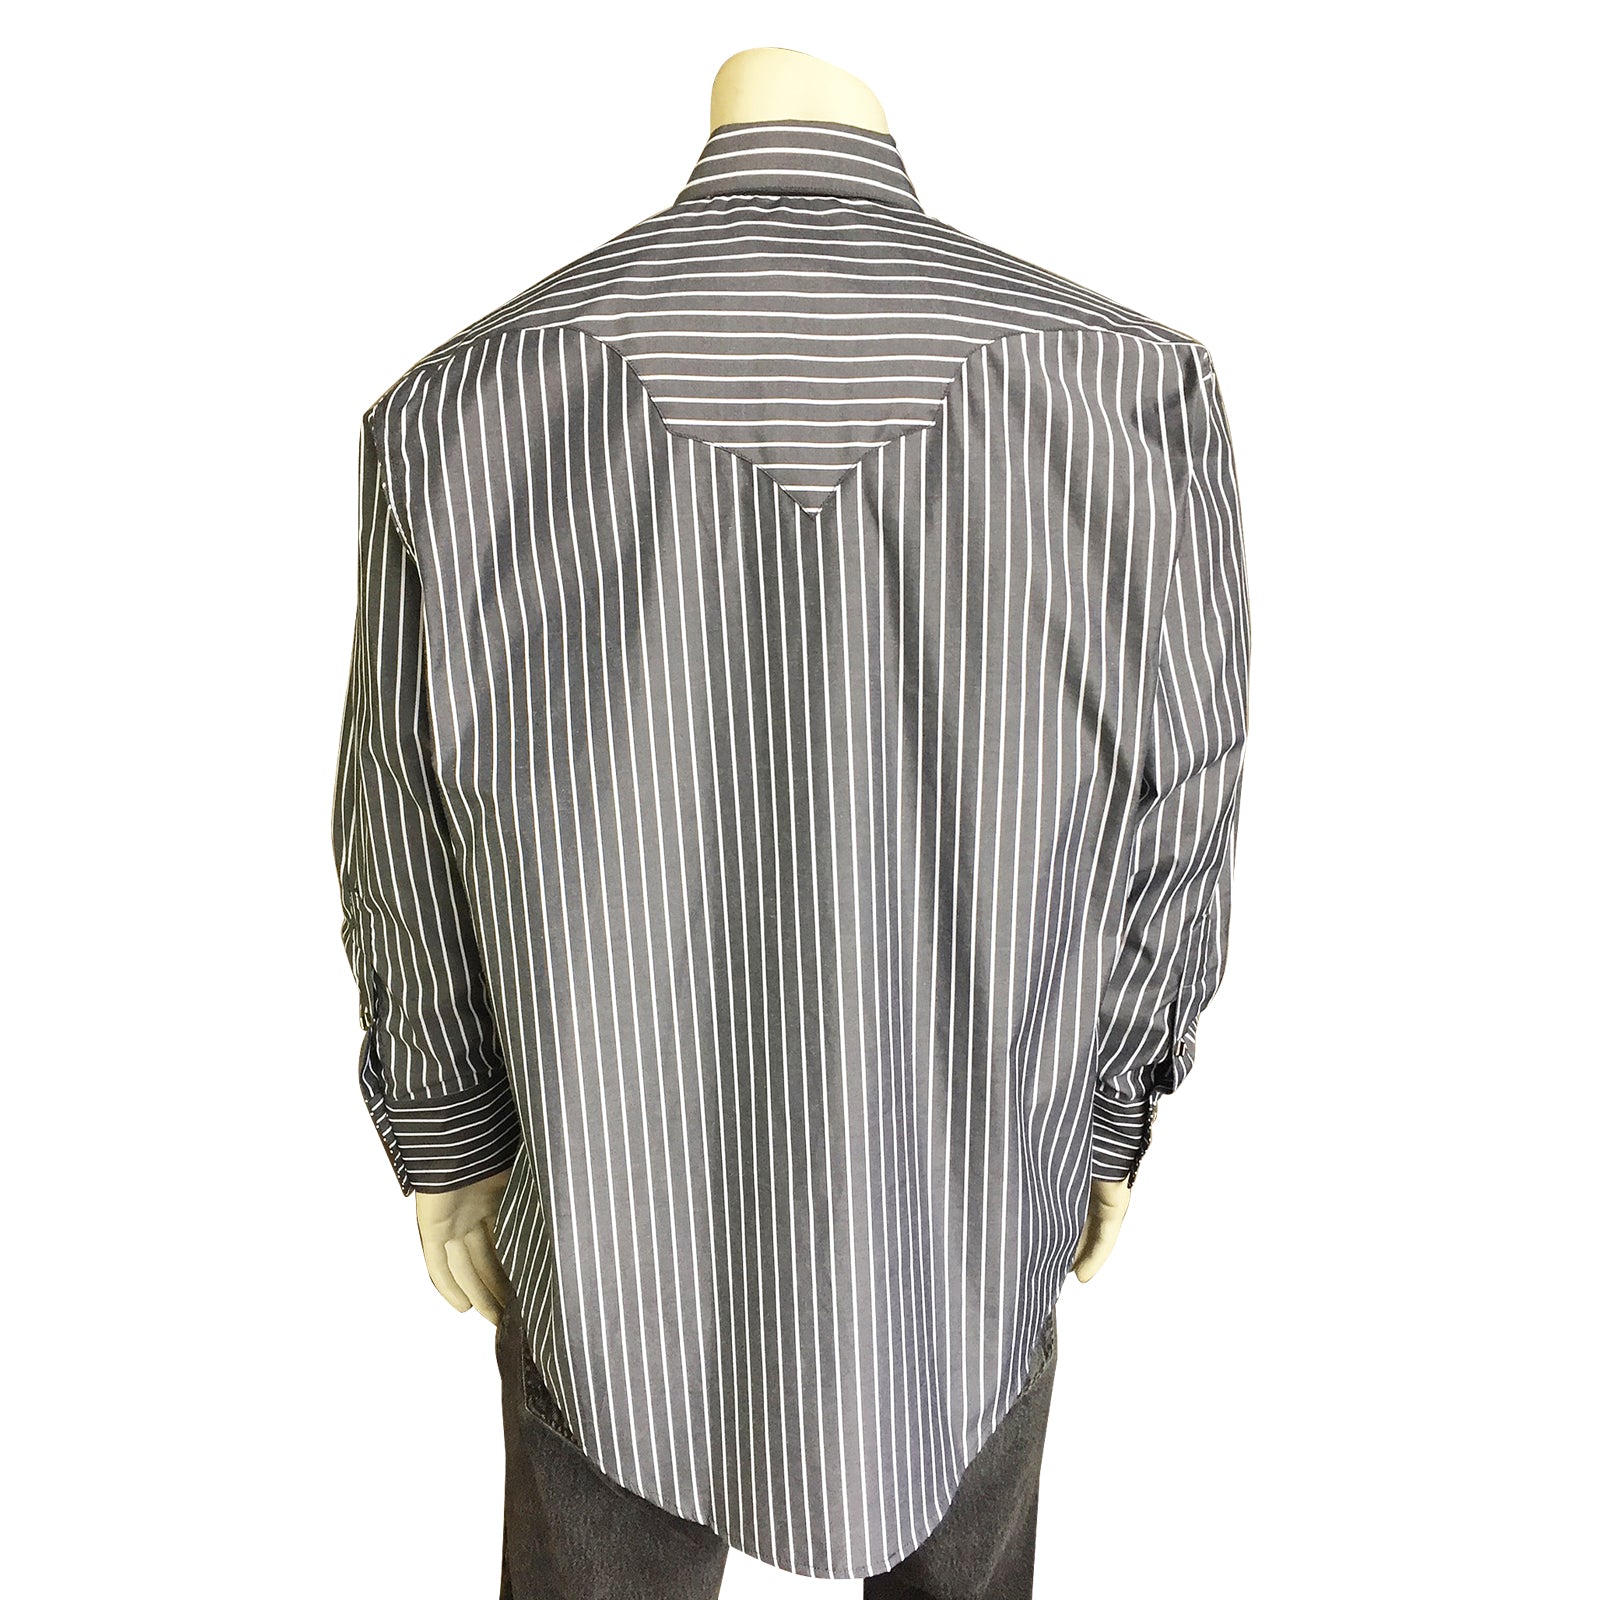 Men's Black Striped Button-Up Shirt